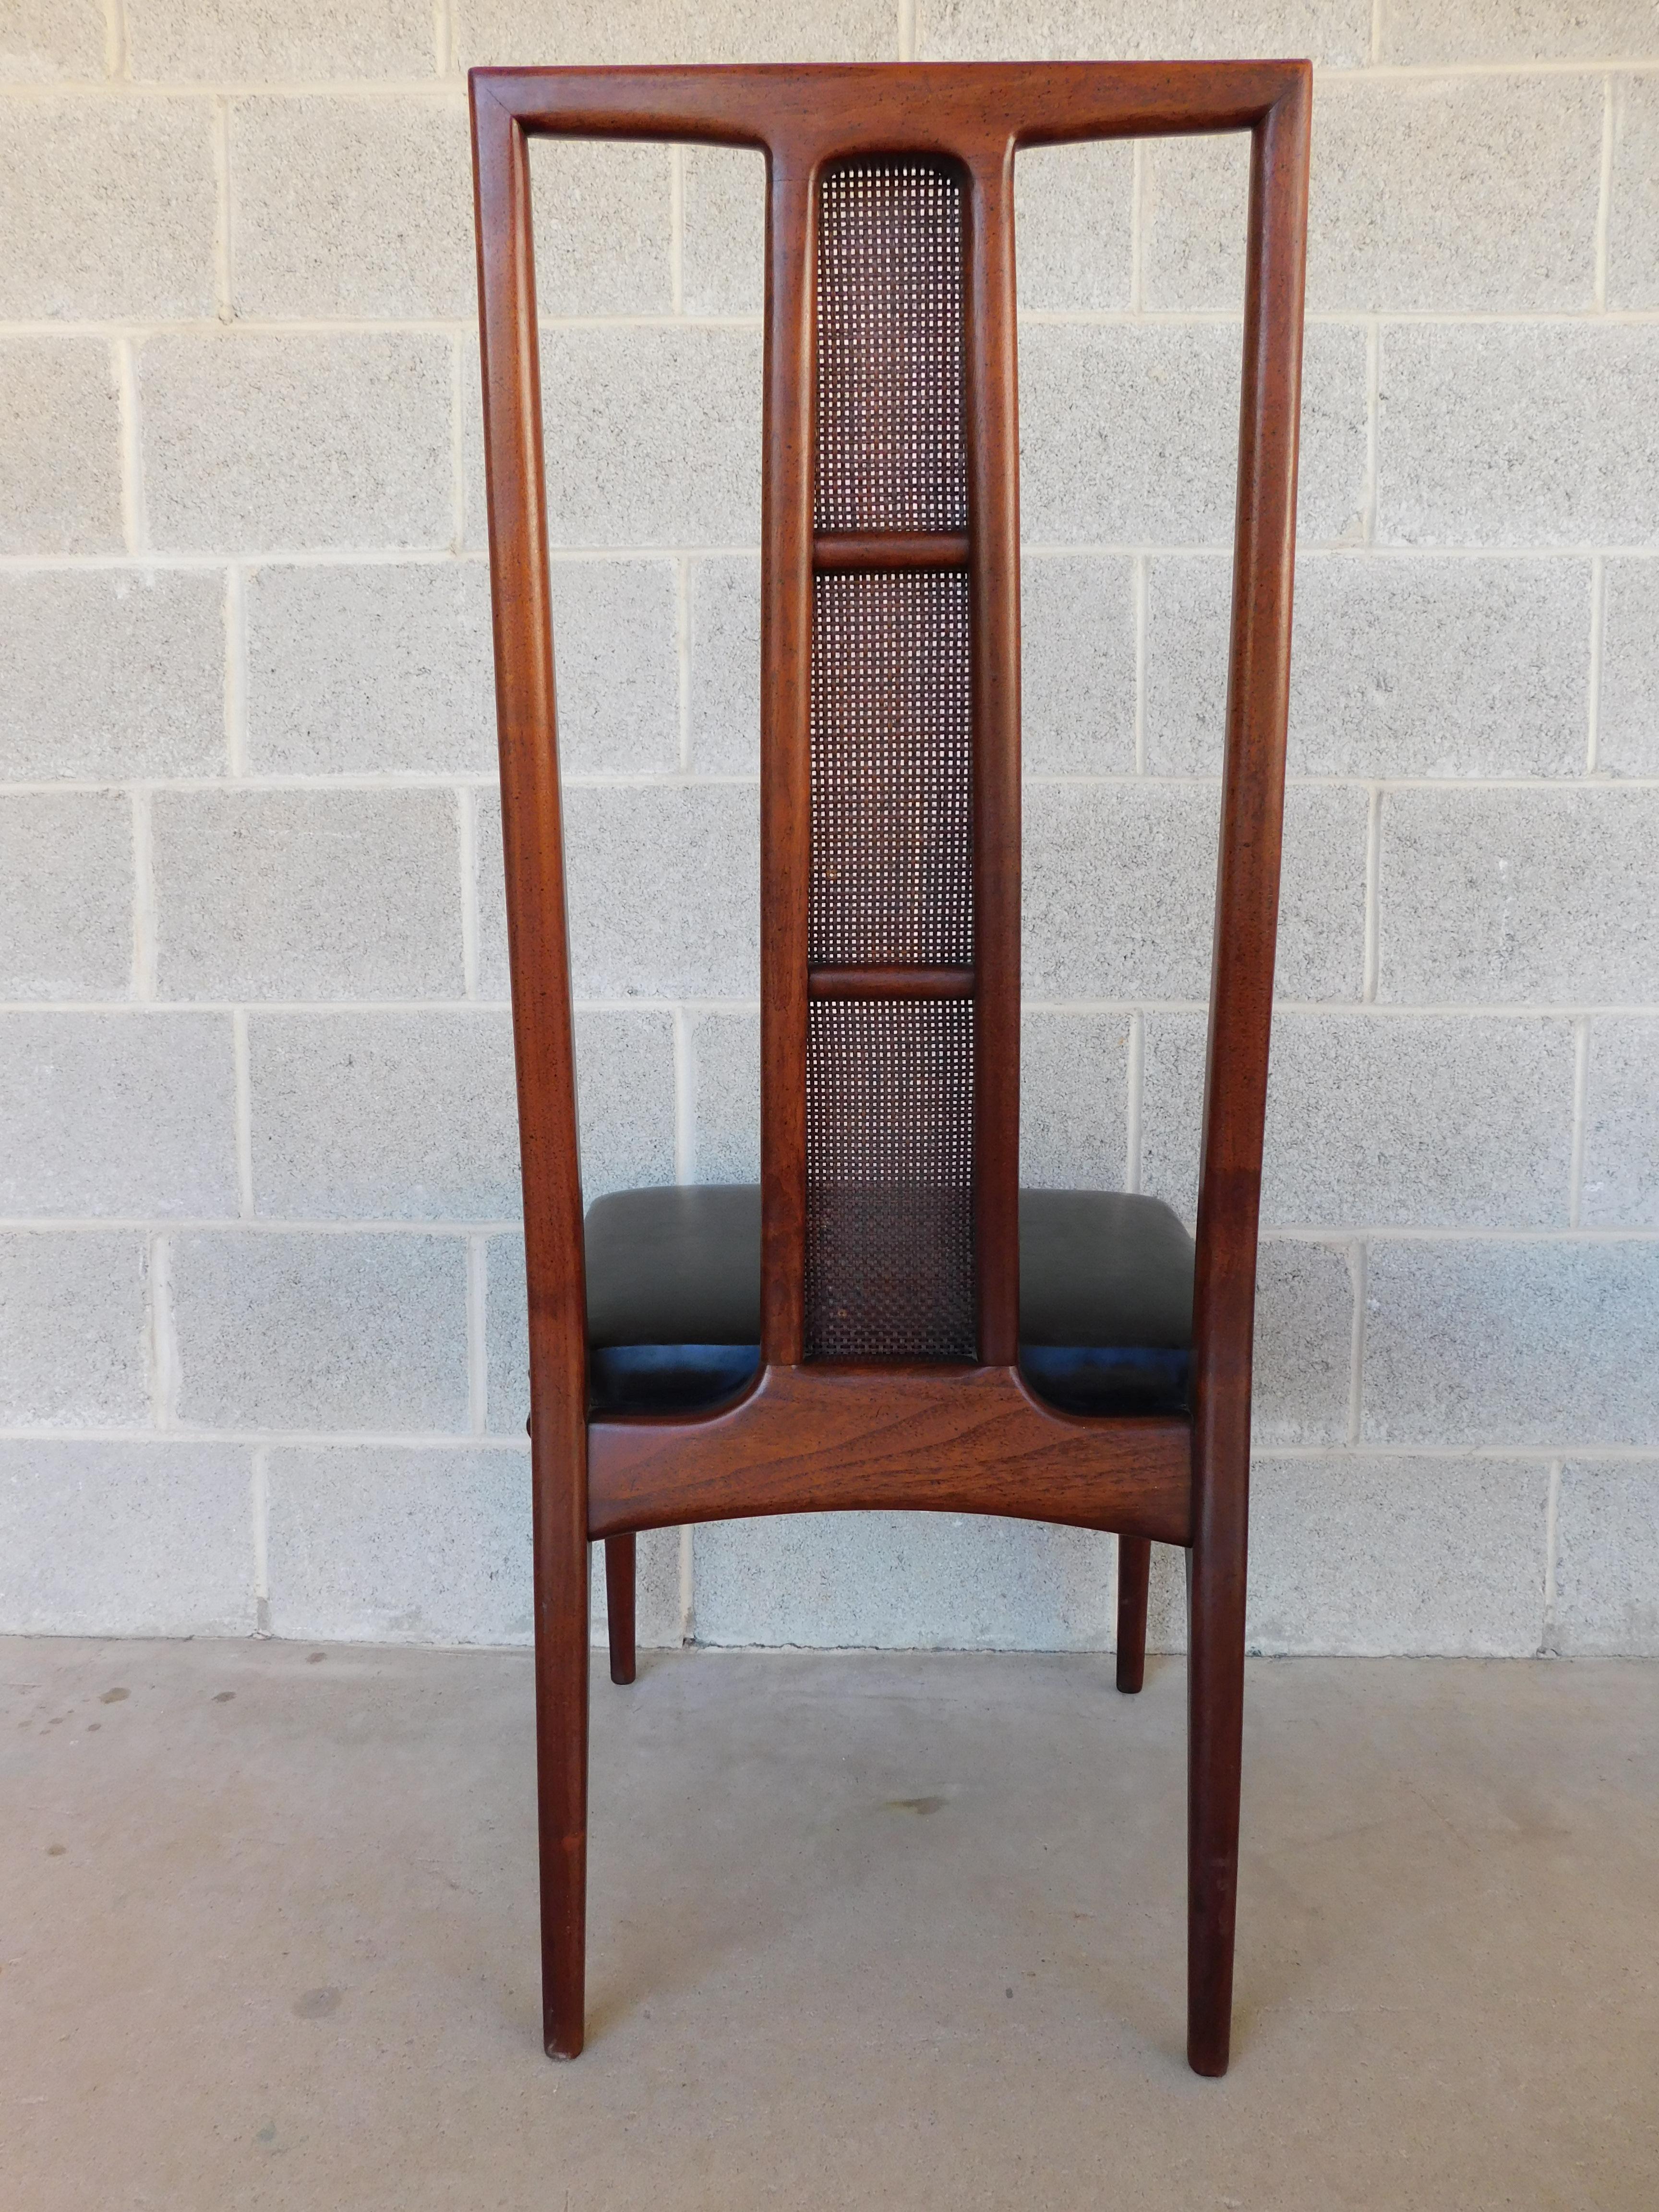 Mount Airy Chair Co. Mid Century John Stuart Walnut Dining Chairs - Set of 6 3